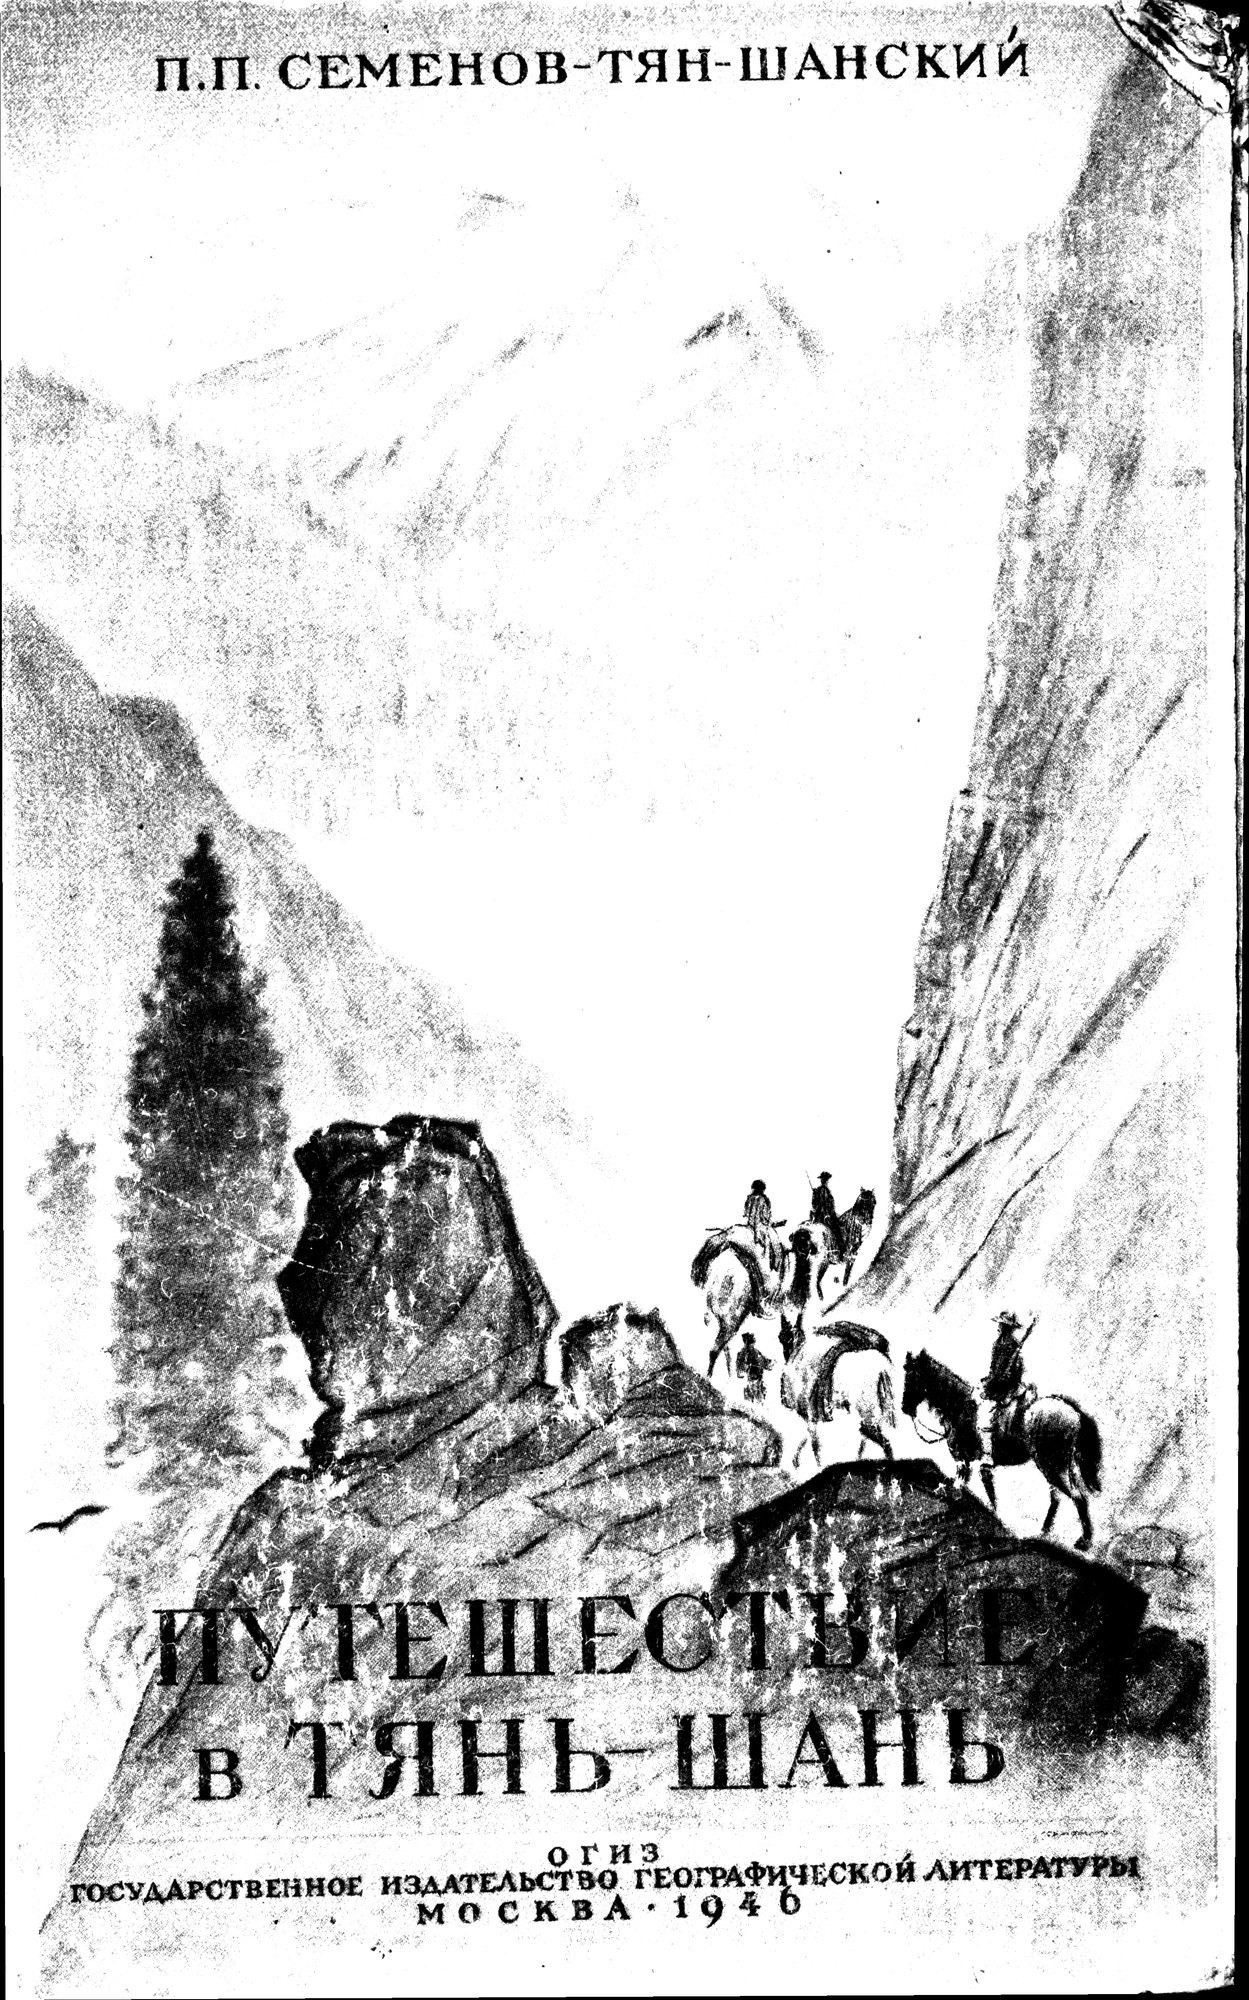 Puteshestvie v Tian' - Shan' v 1856-1857 godakh : vol.1 / Page 1 (Grayscale High Resolution Image)